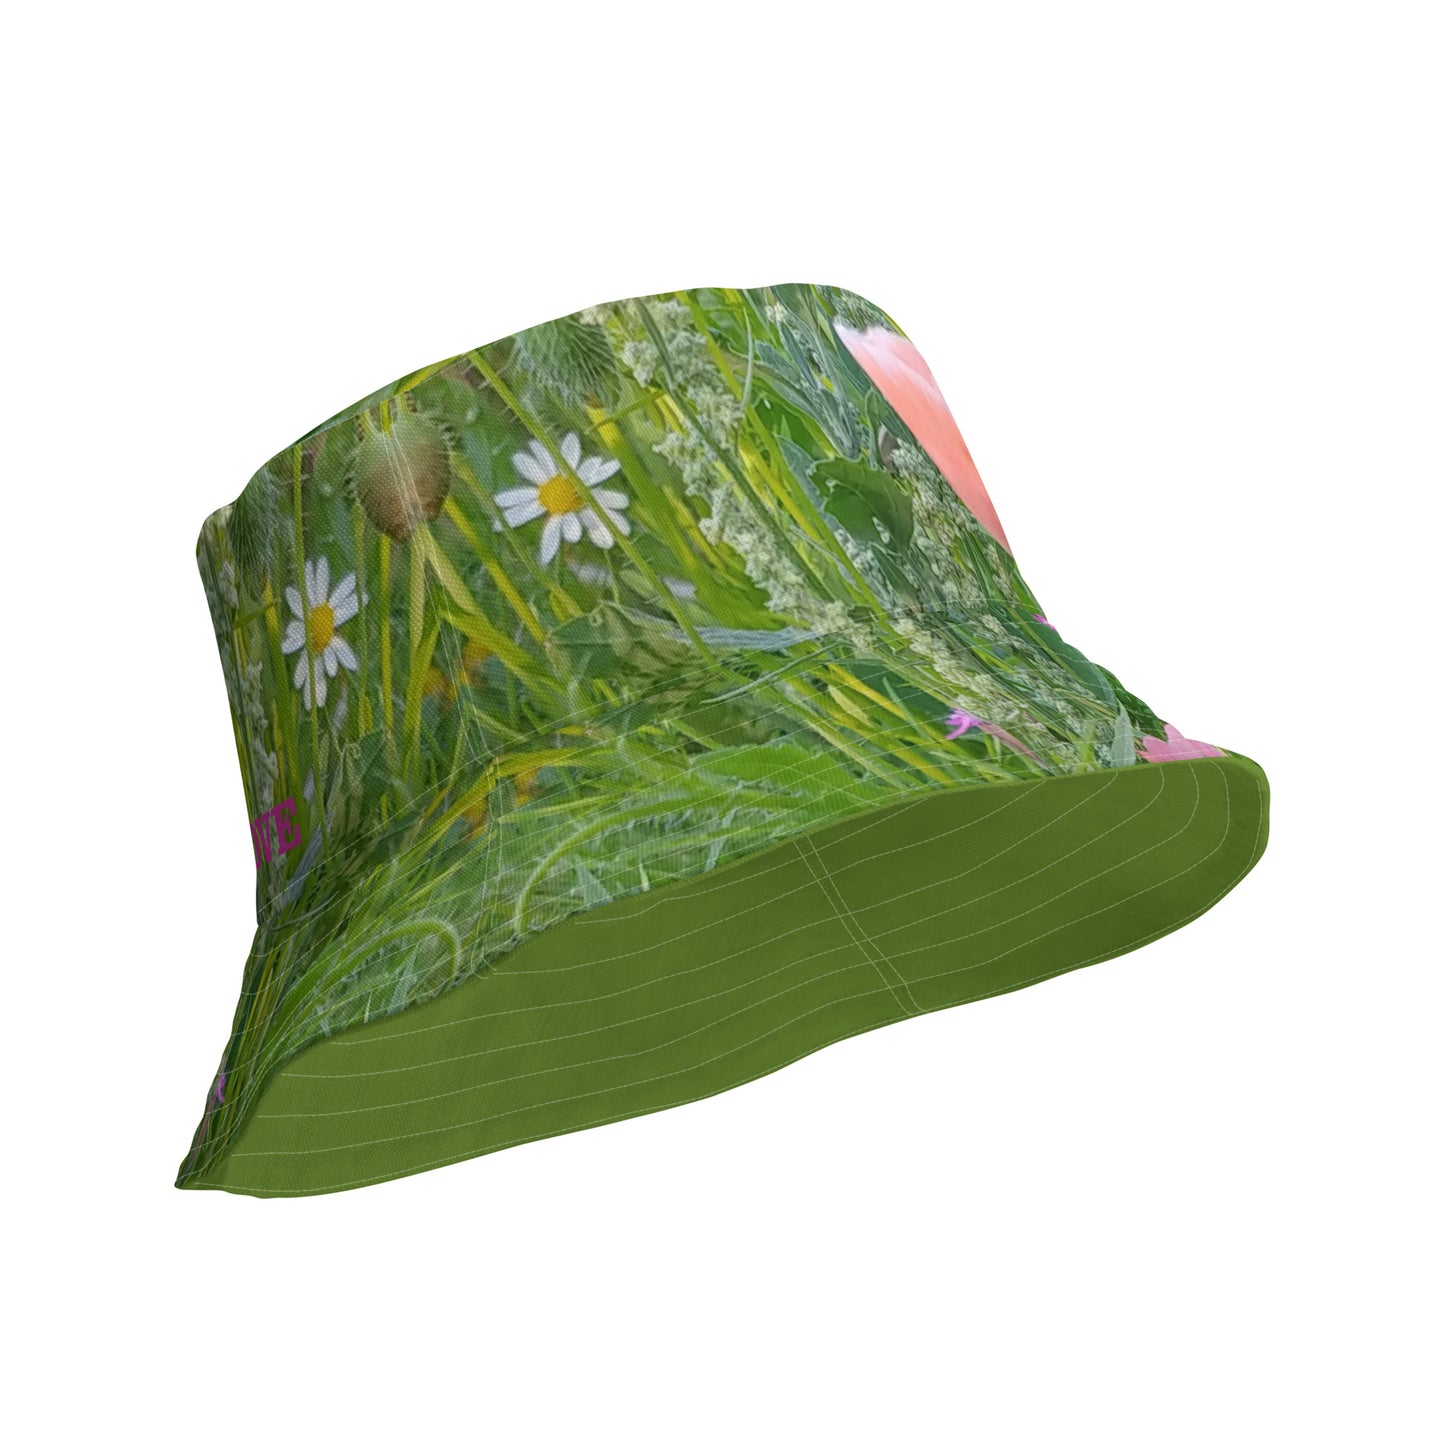 The FLOWER LOVE Collection - "Wildflower Wonder" Design Premium Reversible Bucket Hat - Green Inside - Wildflower Hat, Gifts for Her